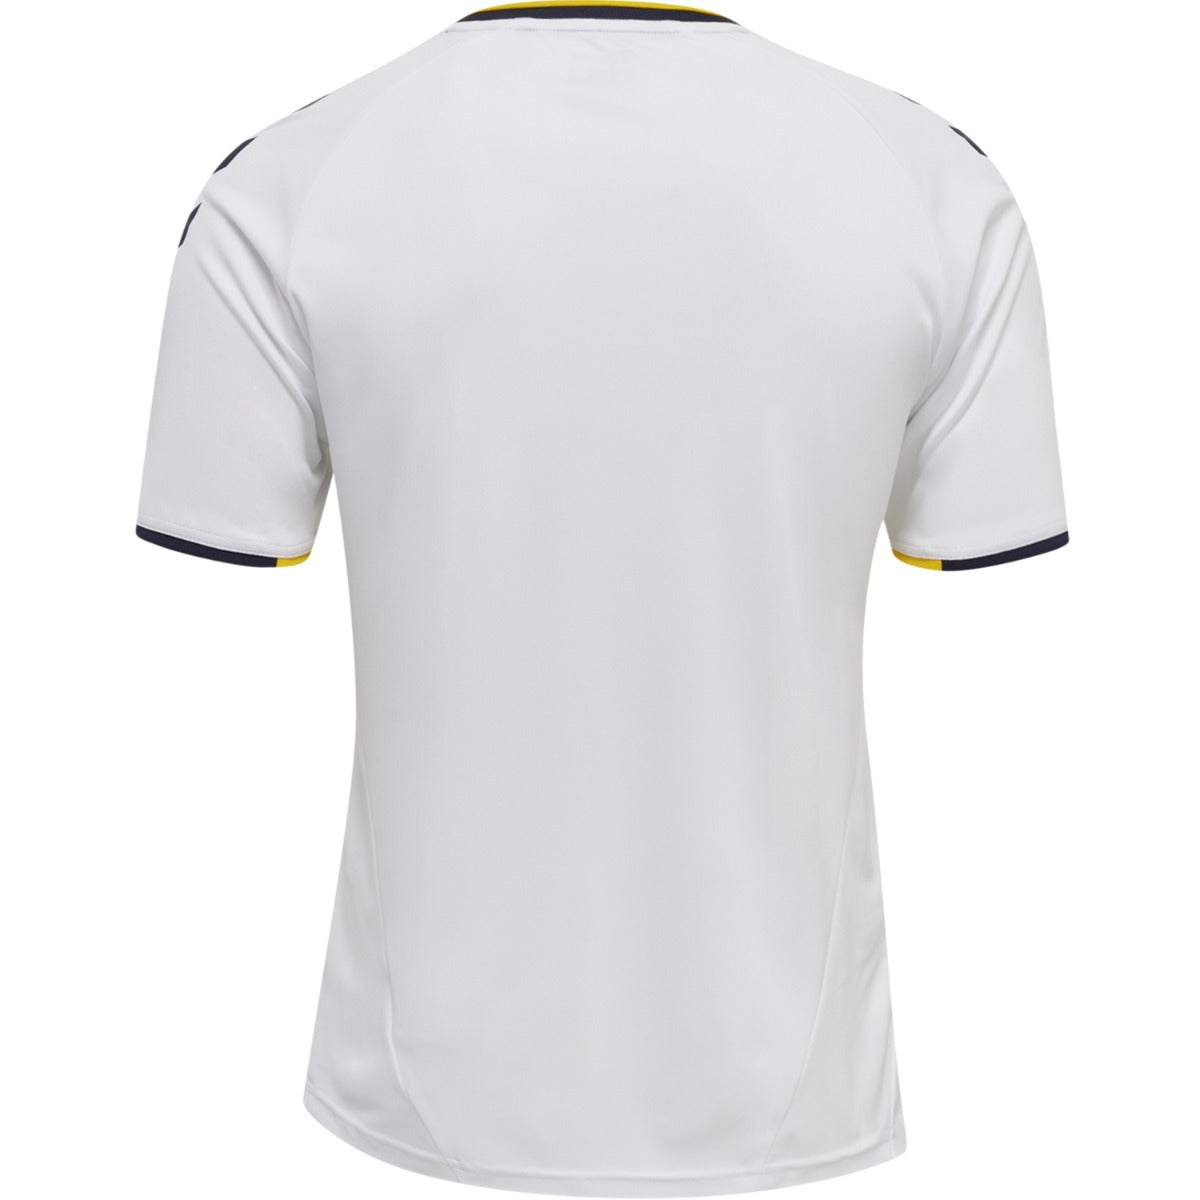 Hummel 2021-22 Everton Third Jersey - White-Black-Yellow (Back)